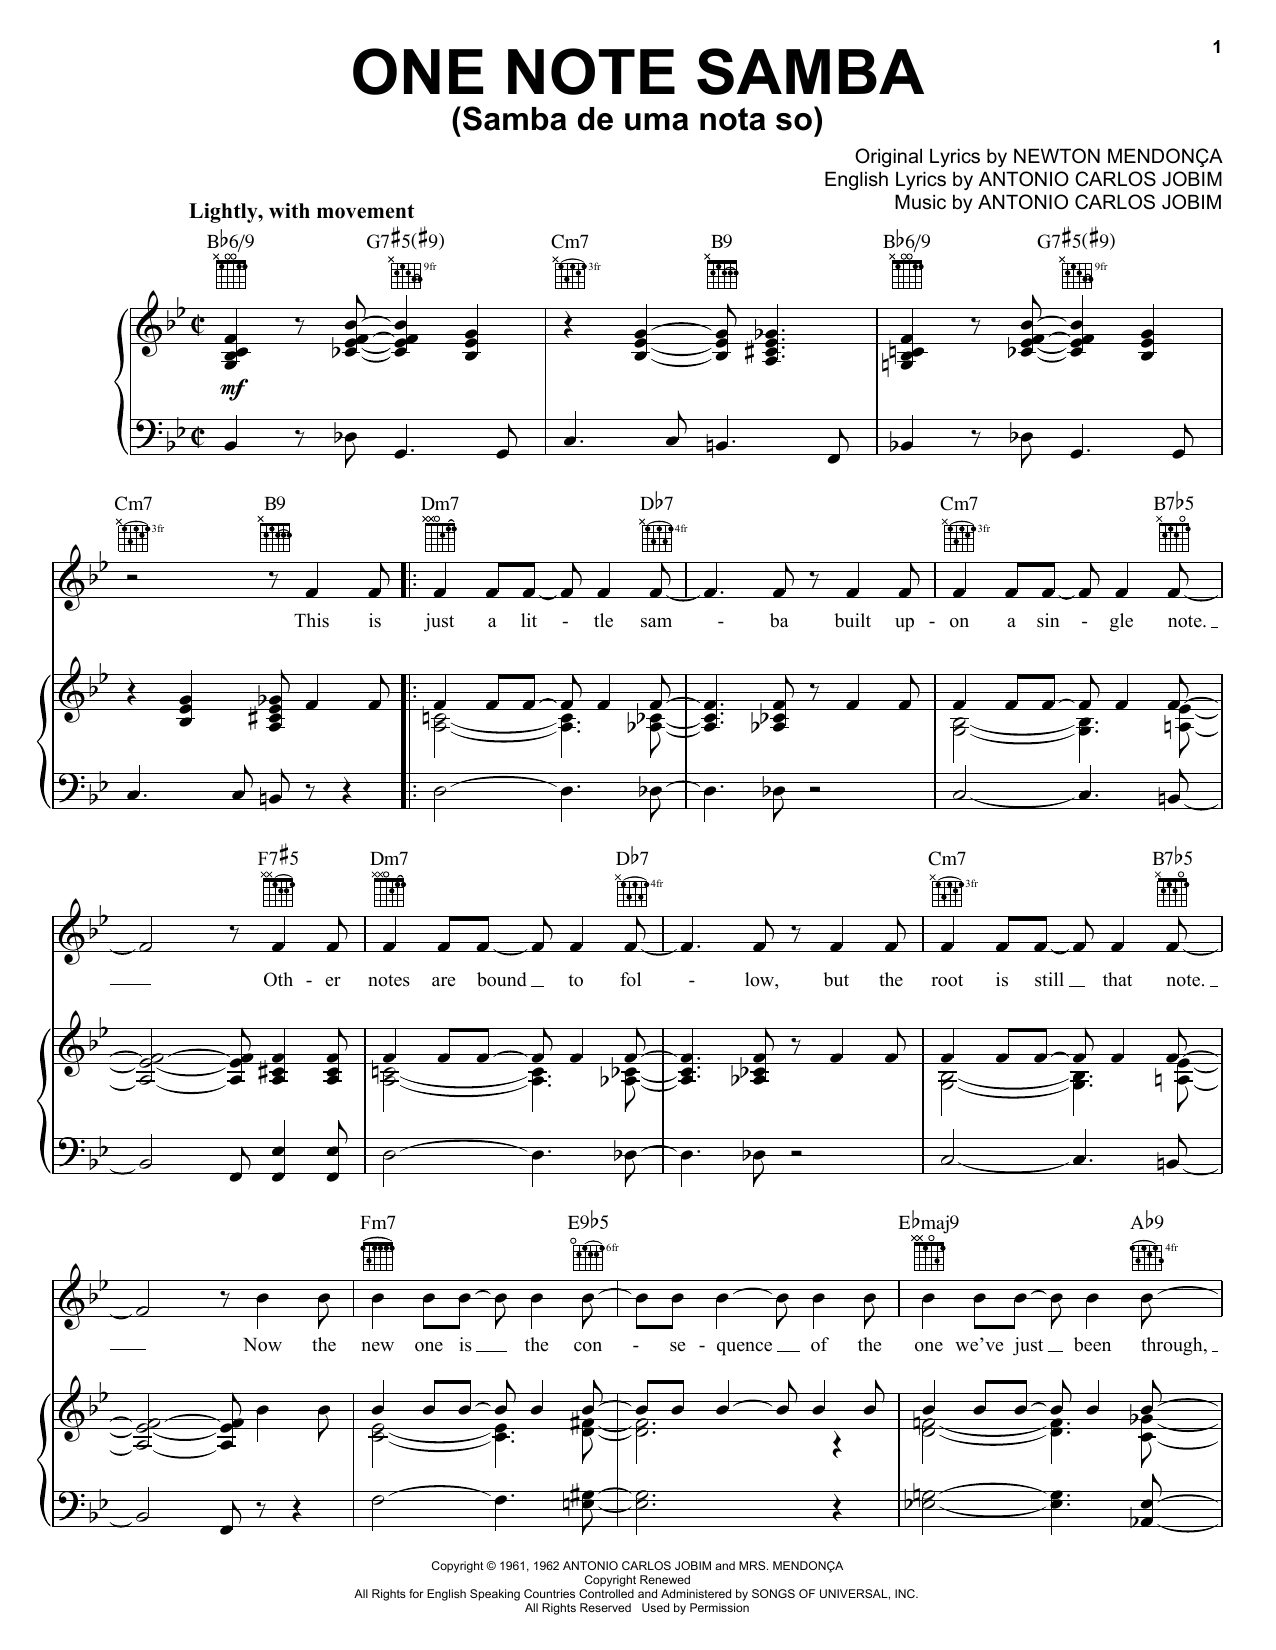 Download Antonio Carlos Jobim One Note Samba (Samba De Uma Nota So) Sheet Music and learn how to play Alto Saxophone PDF digital score in minutes